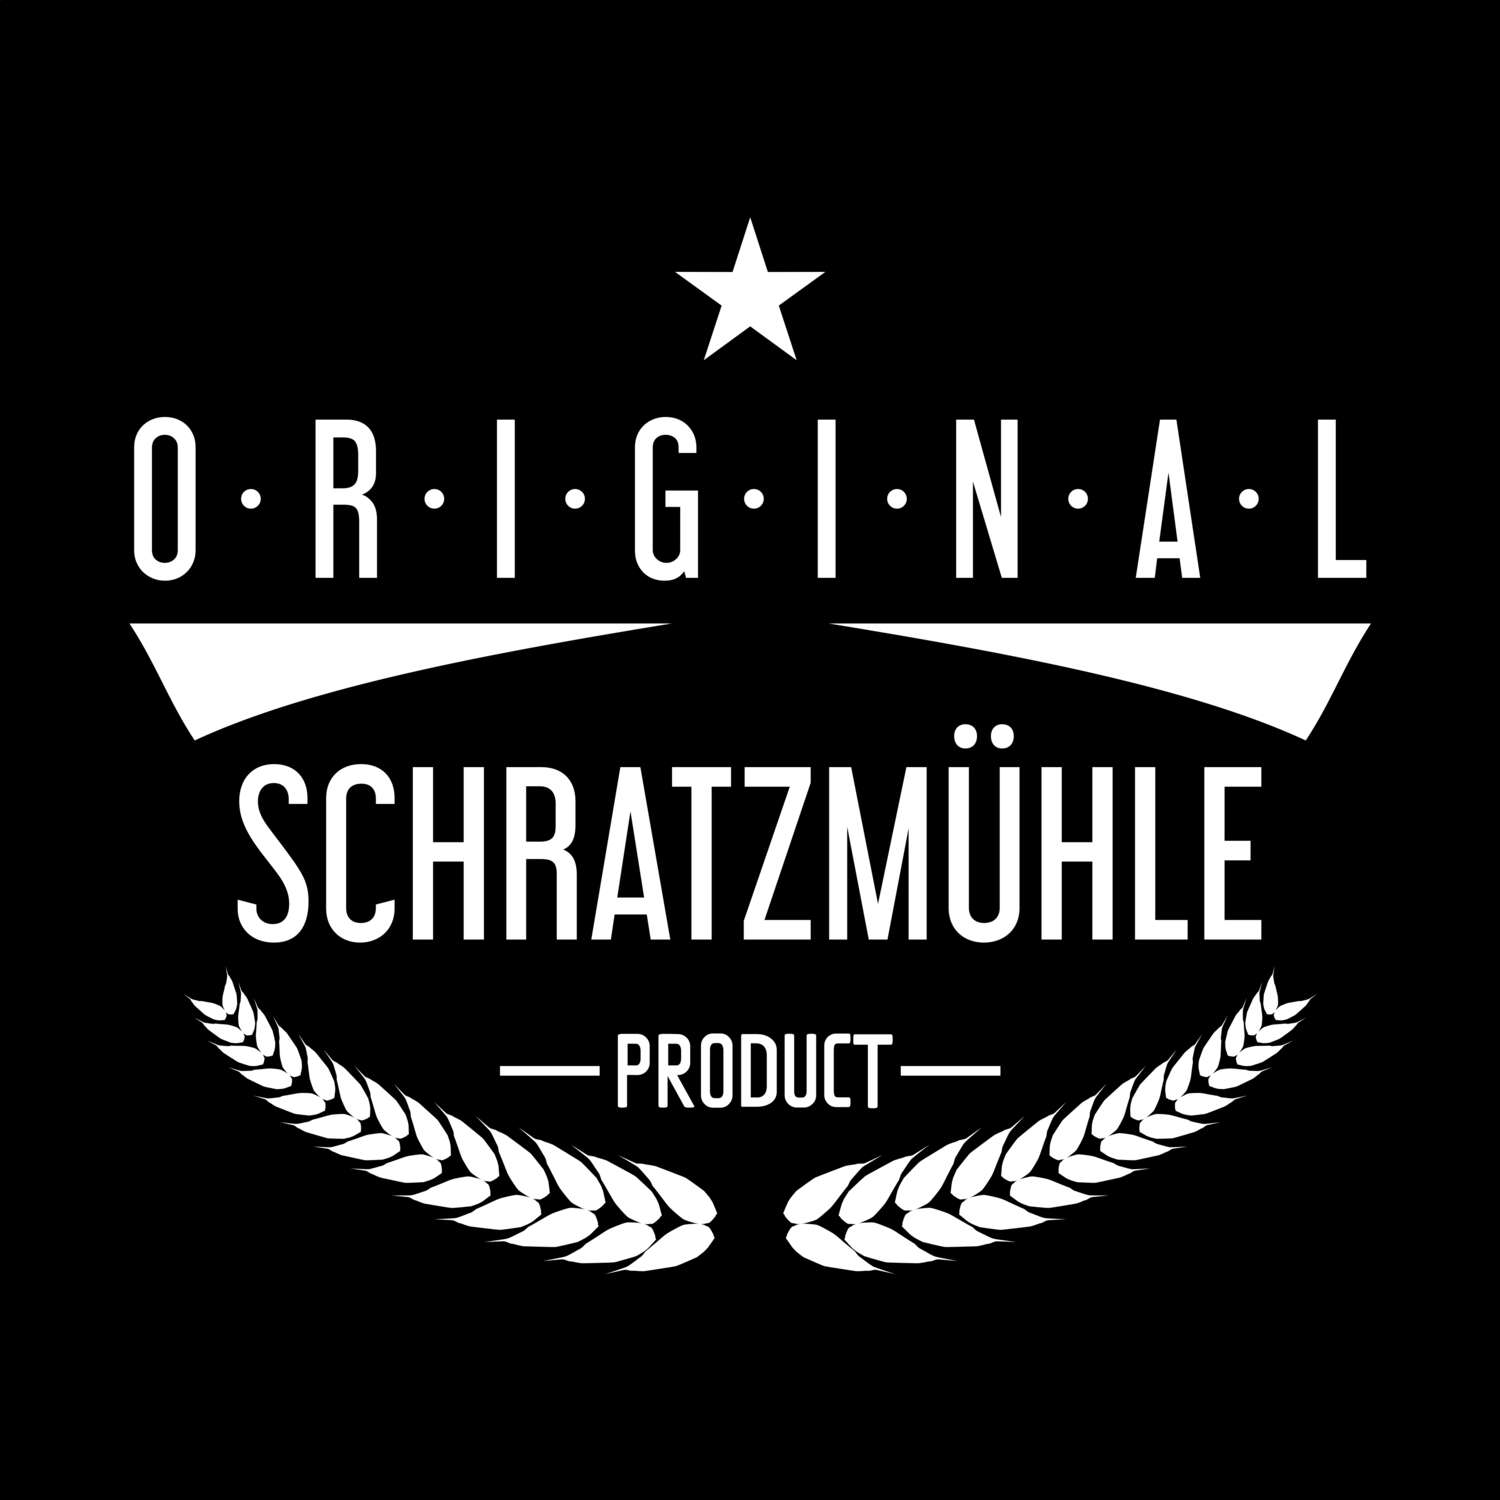 Schratzmühle T-Shirt »Original Product«